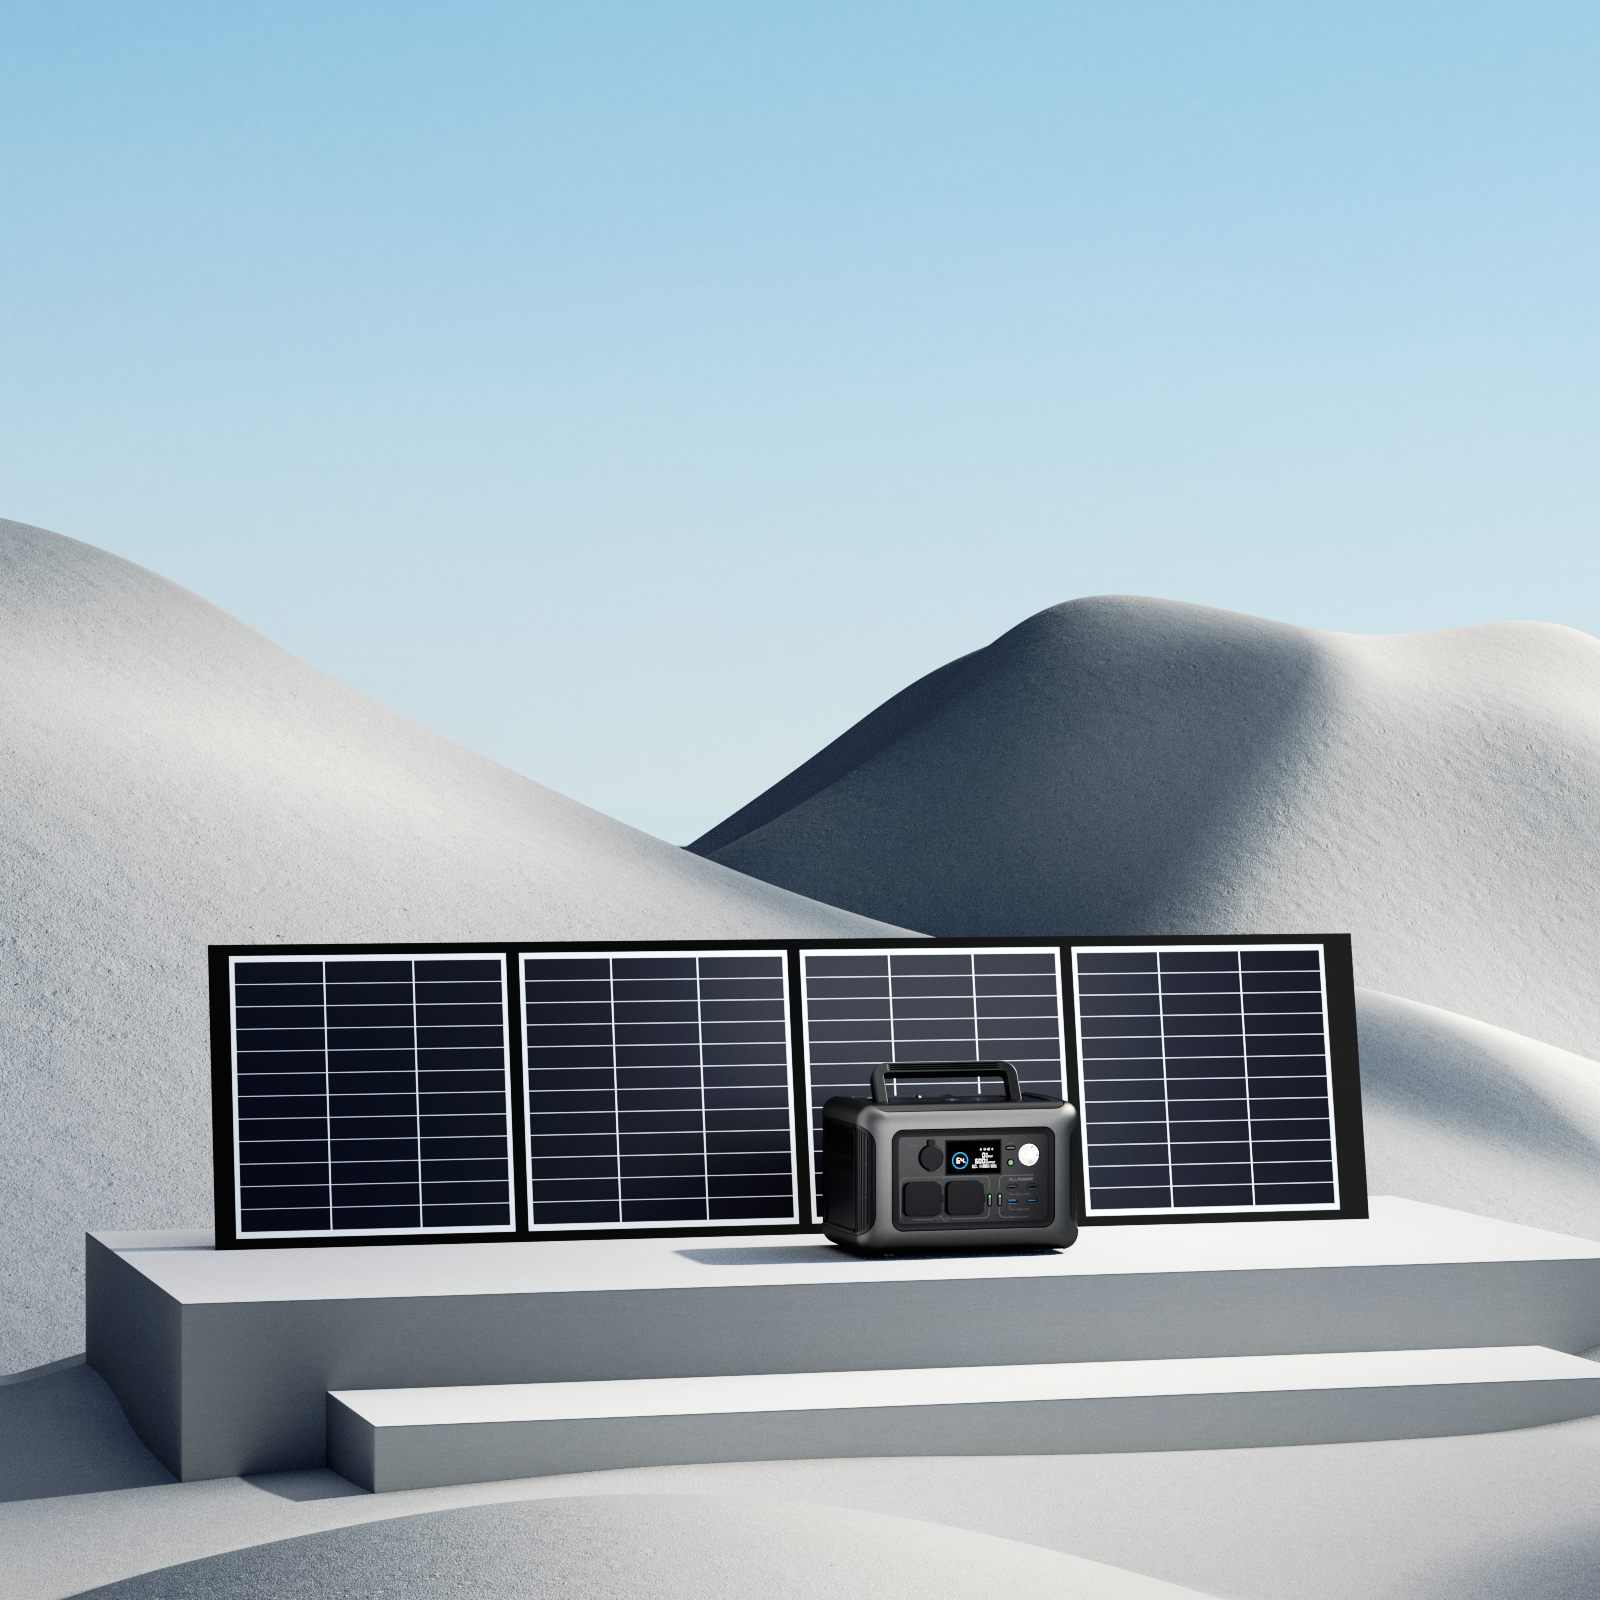 ALLPOWERS Solar Generator Kit 600W (R600 + SP035 200W Solar Panel with Monocrystalline Cell)